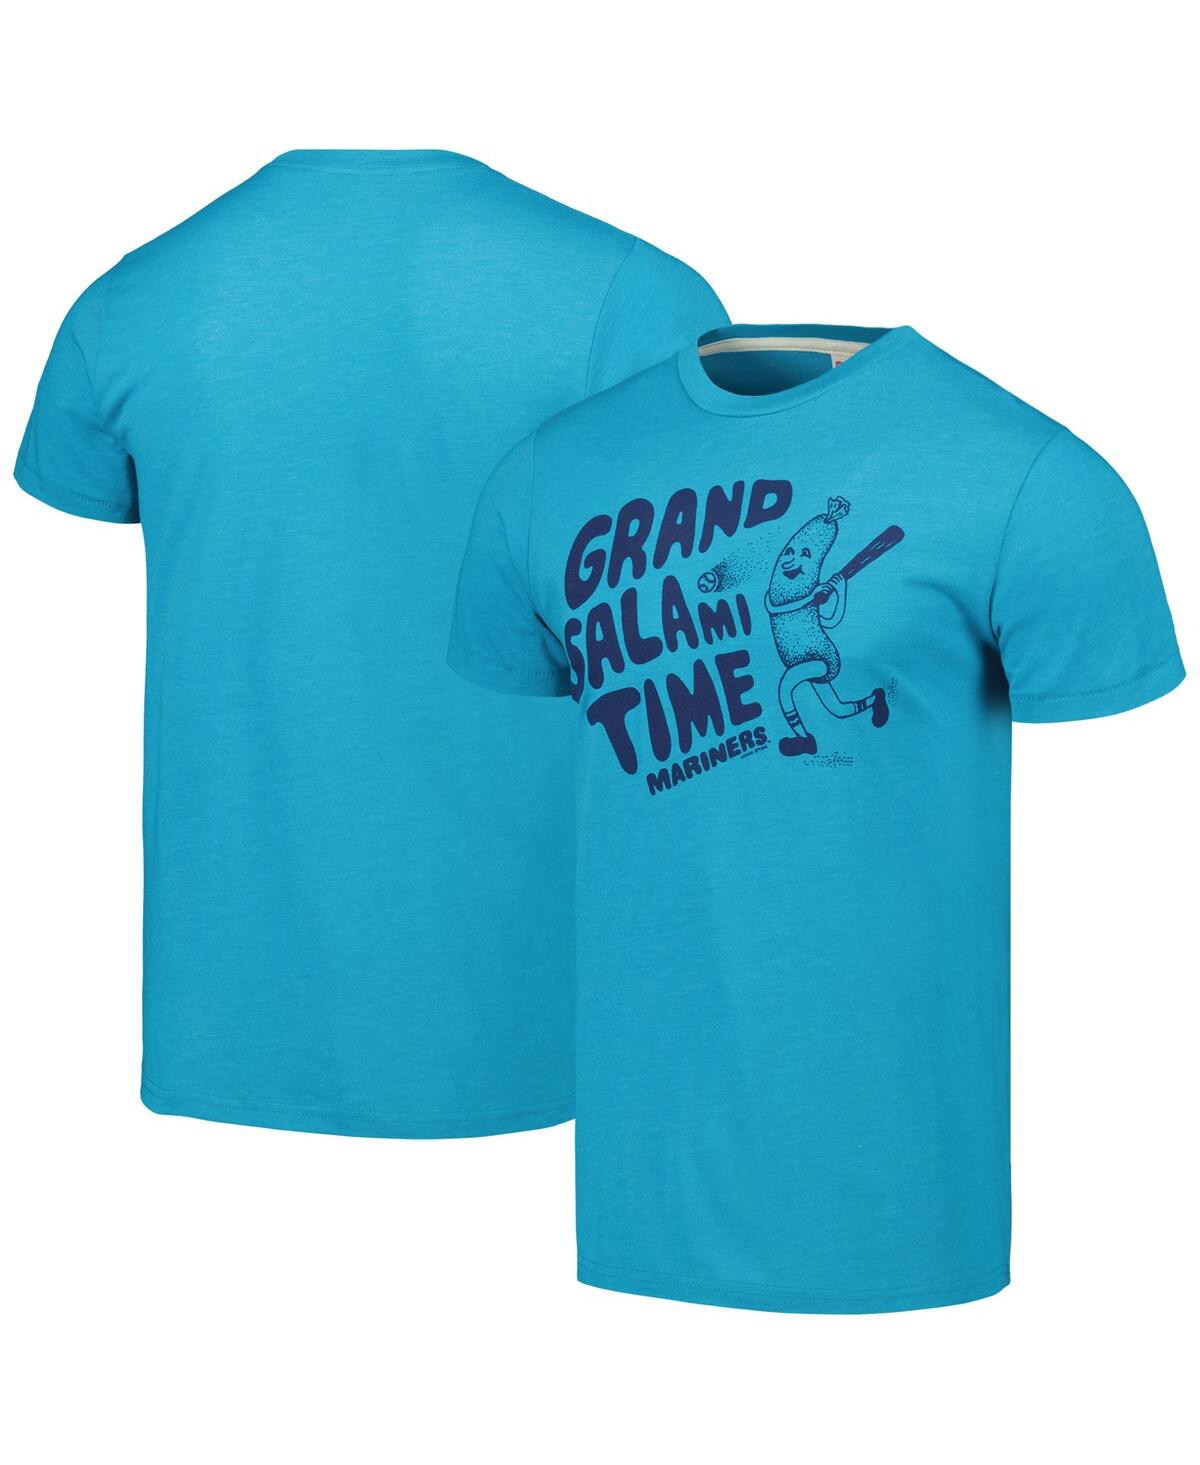 Homage Men's  Aqua Seattle Mariners Grand Salami Time Hyper Local Tri-blend T-shirt